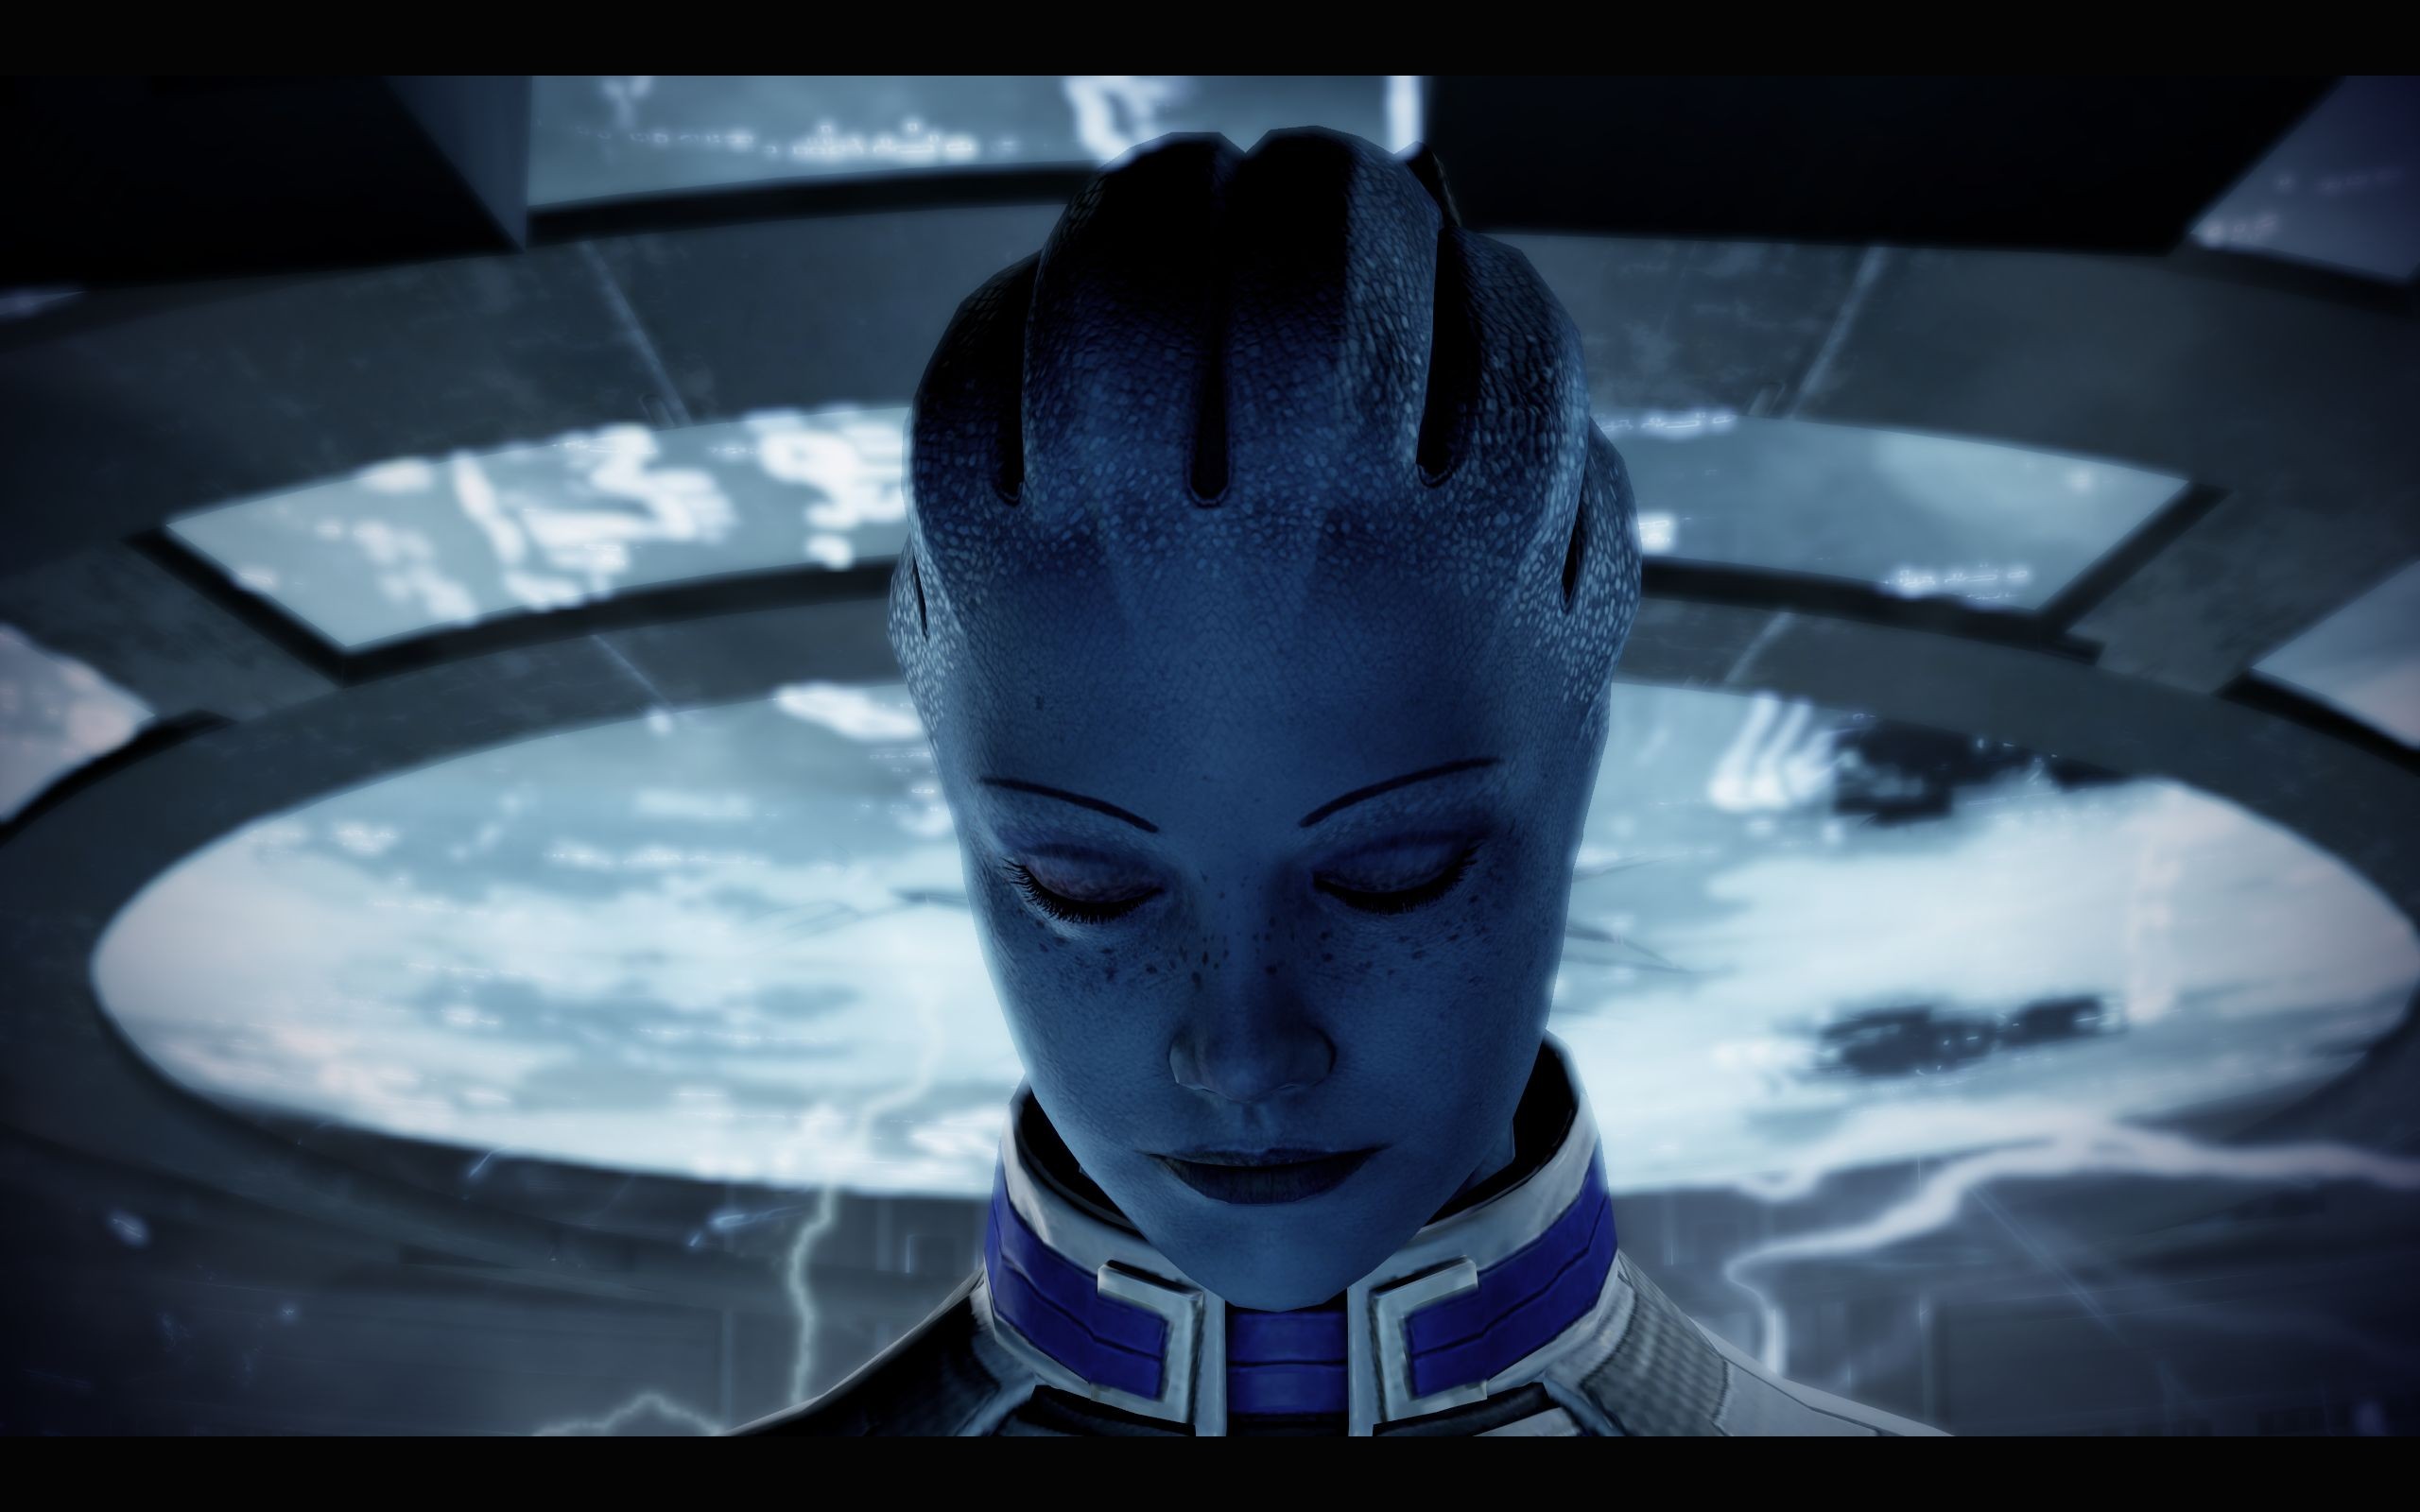 General 2560x1600 Mass Effect video games Liara T'Soni science fiction PC gaming science fiction women blue skin Asari